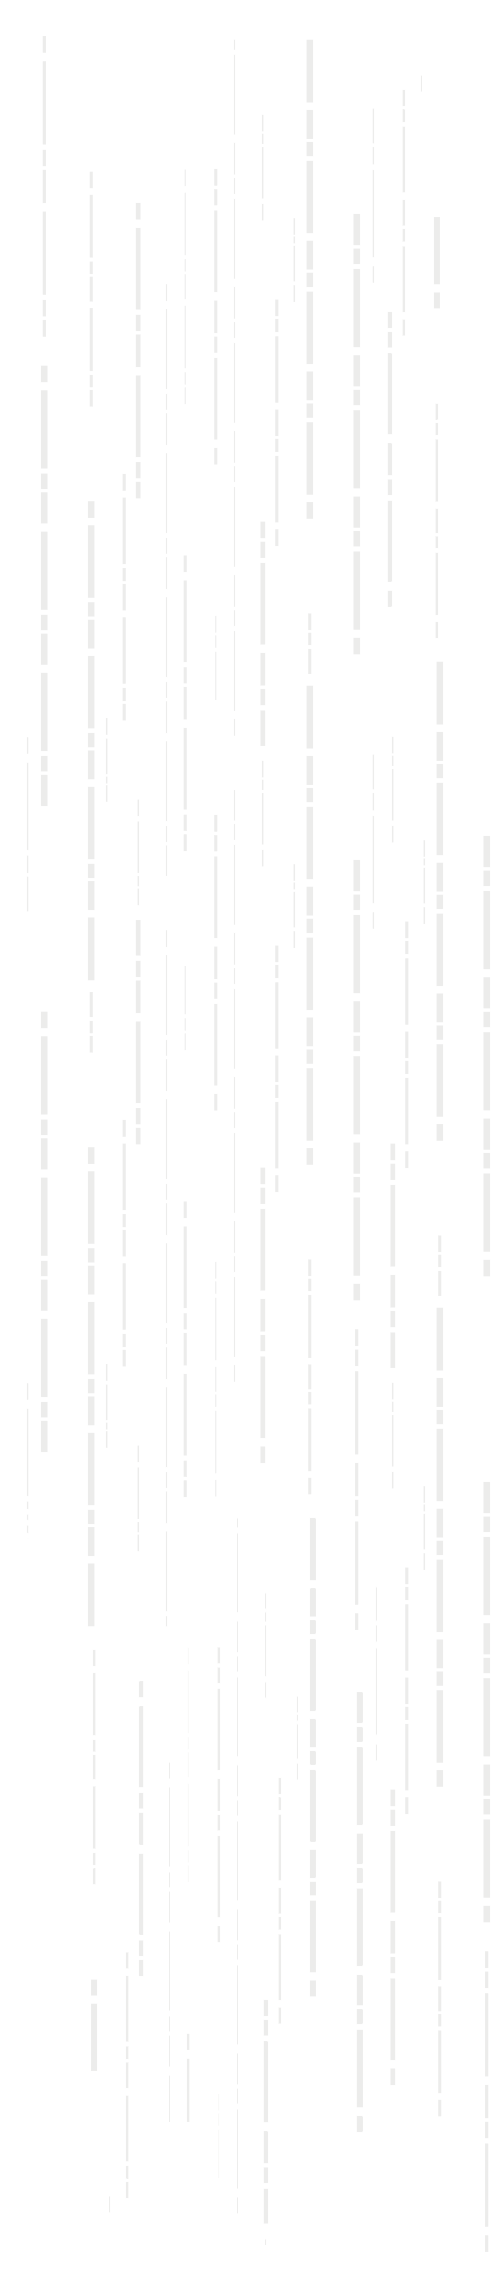 gray lines